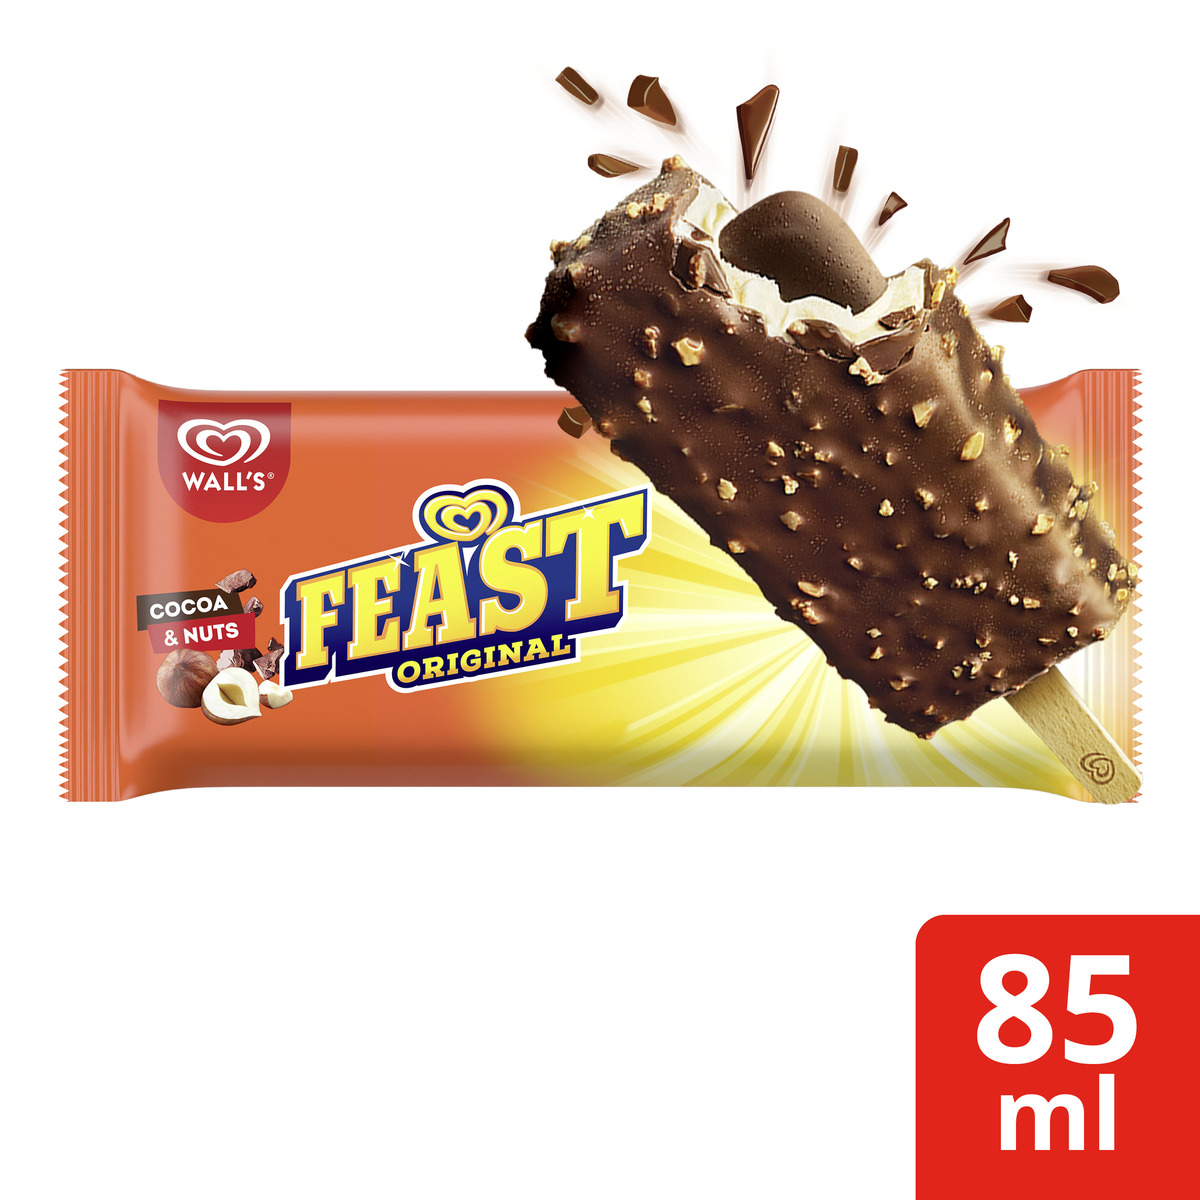 Wall's Feast Original Ice Cream Stick, 85 ml